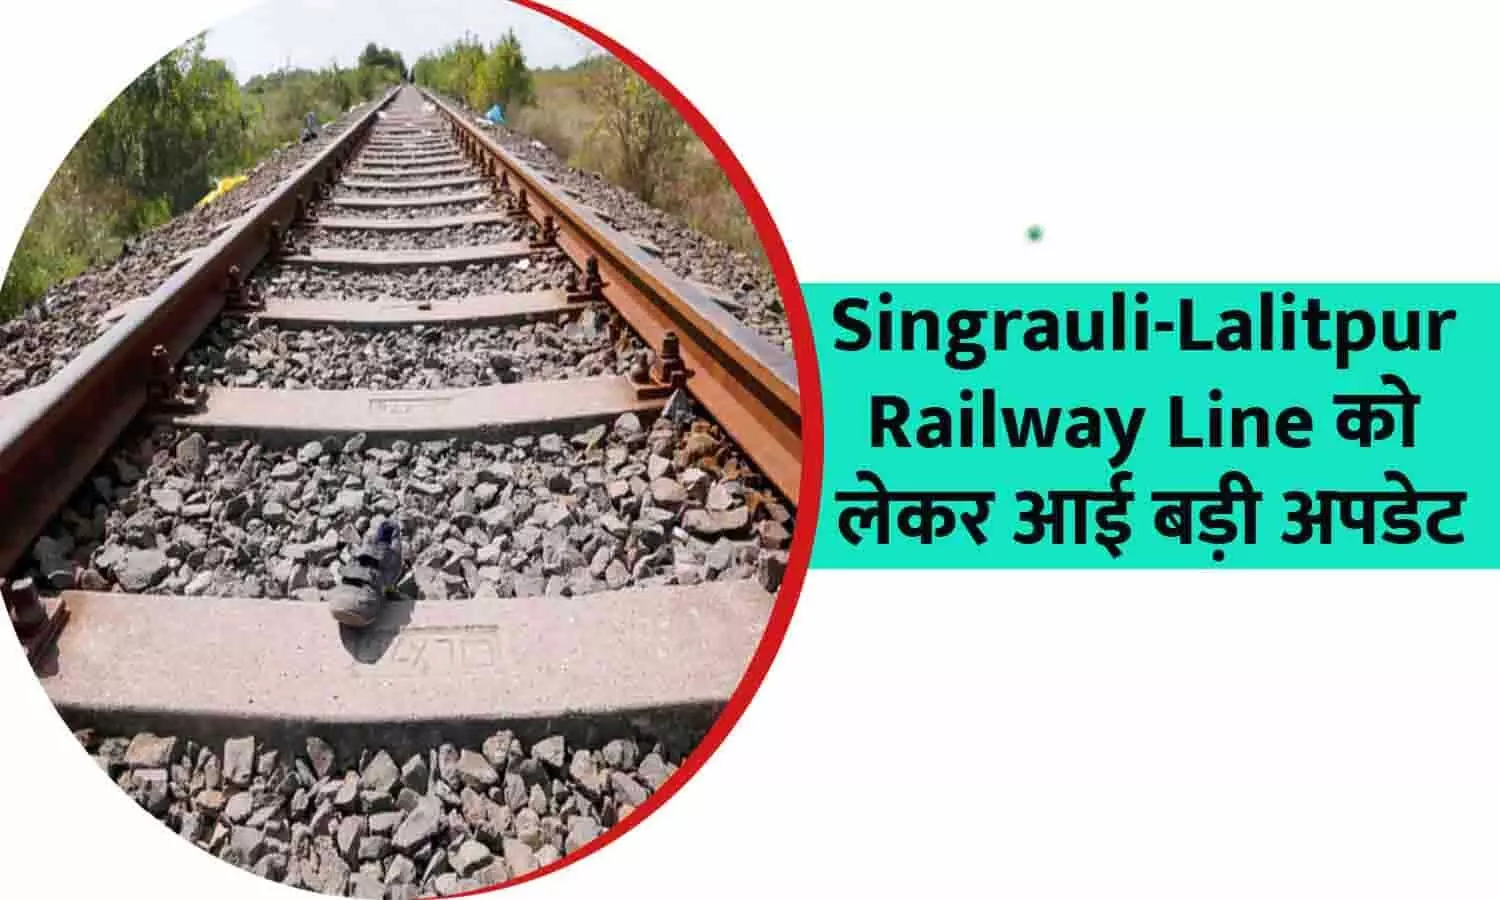 Singrauli-Lalitpur Railway Line